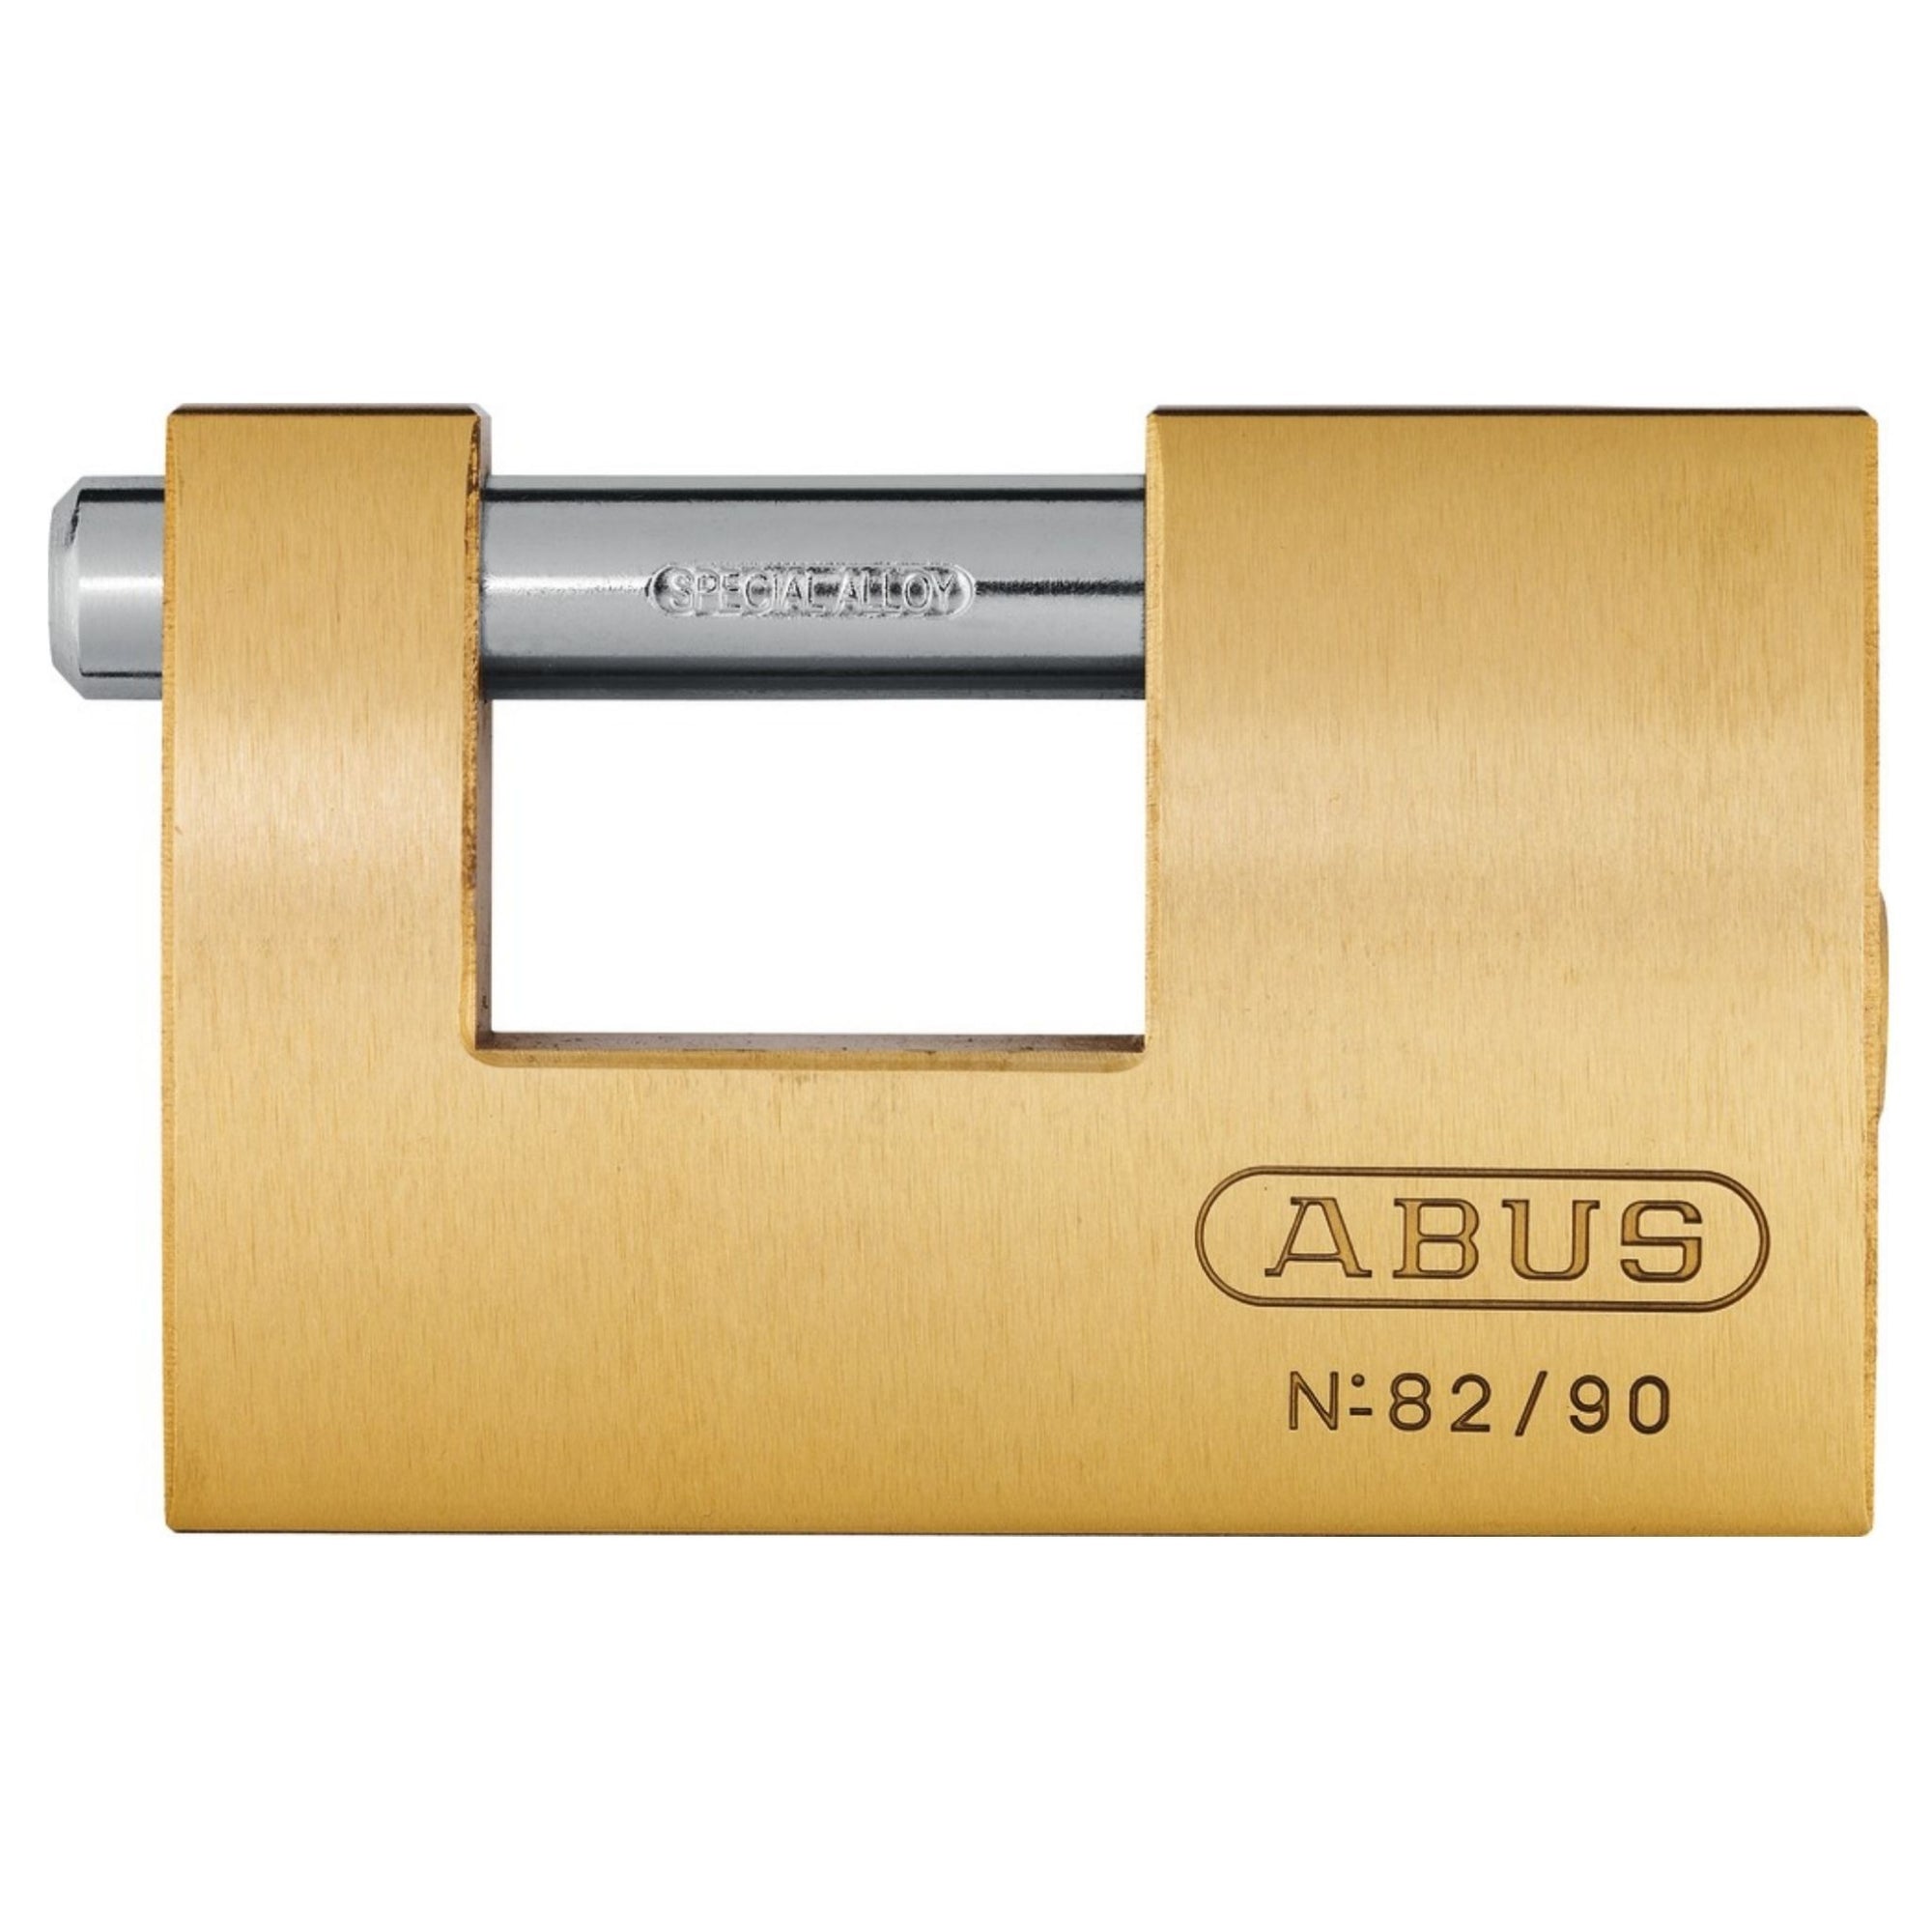 Abus 82/90 KD Lock Keyed Different Monoblock Brass Padlocks - The Lock Source